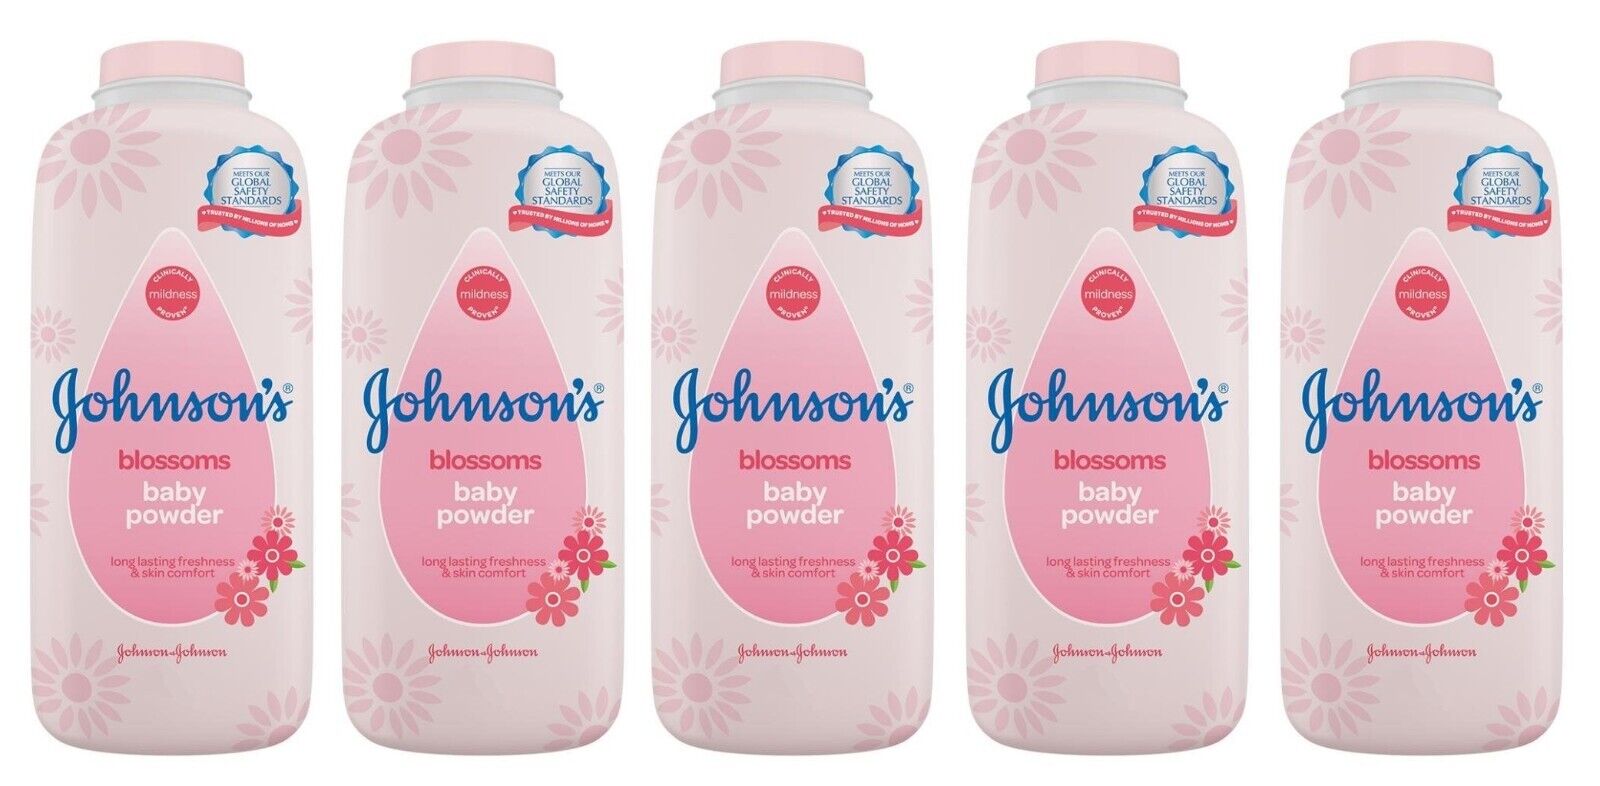 5 Johnson's Baby Powder Blossoms TALC International Version 17.6 oz \ 500G X 5pk